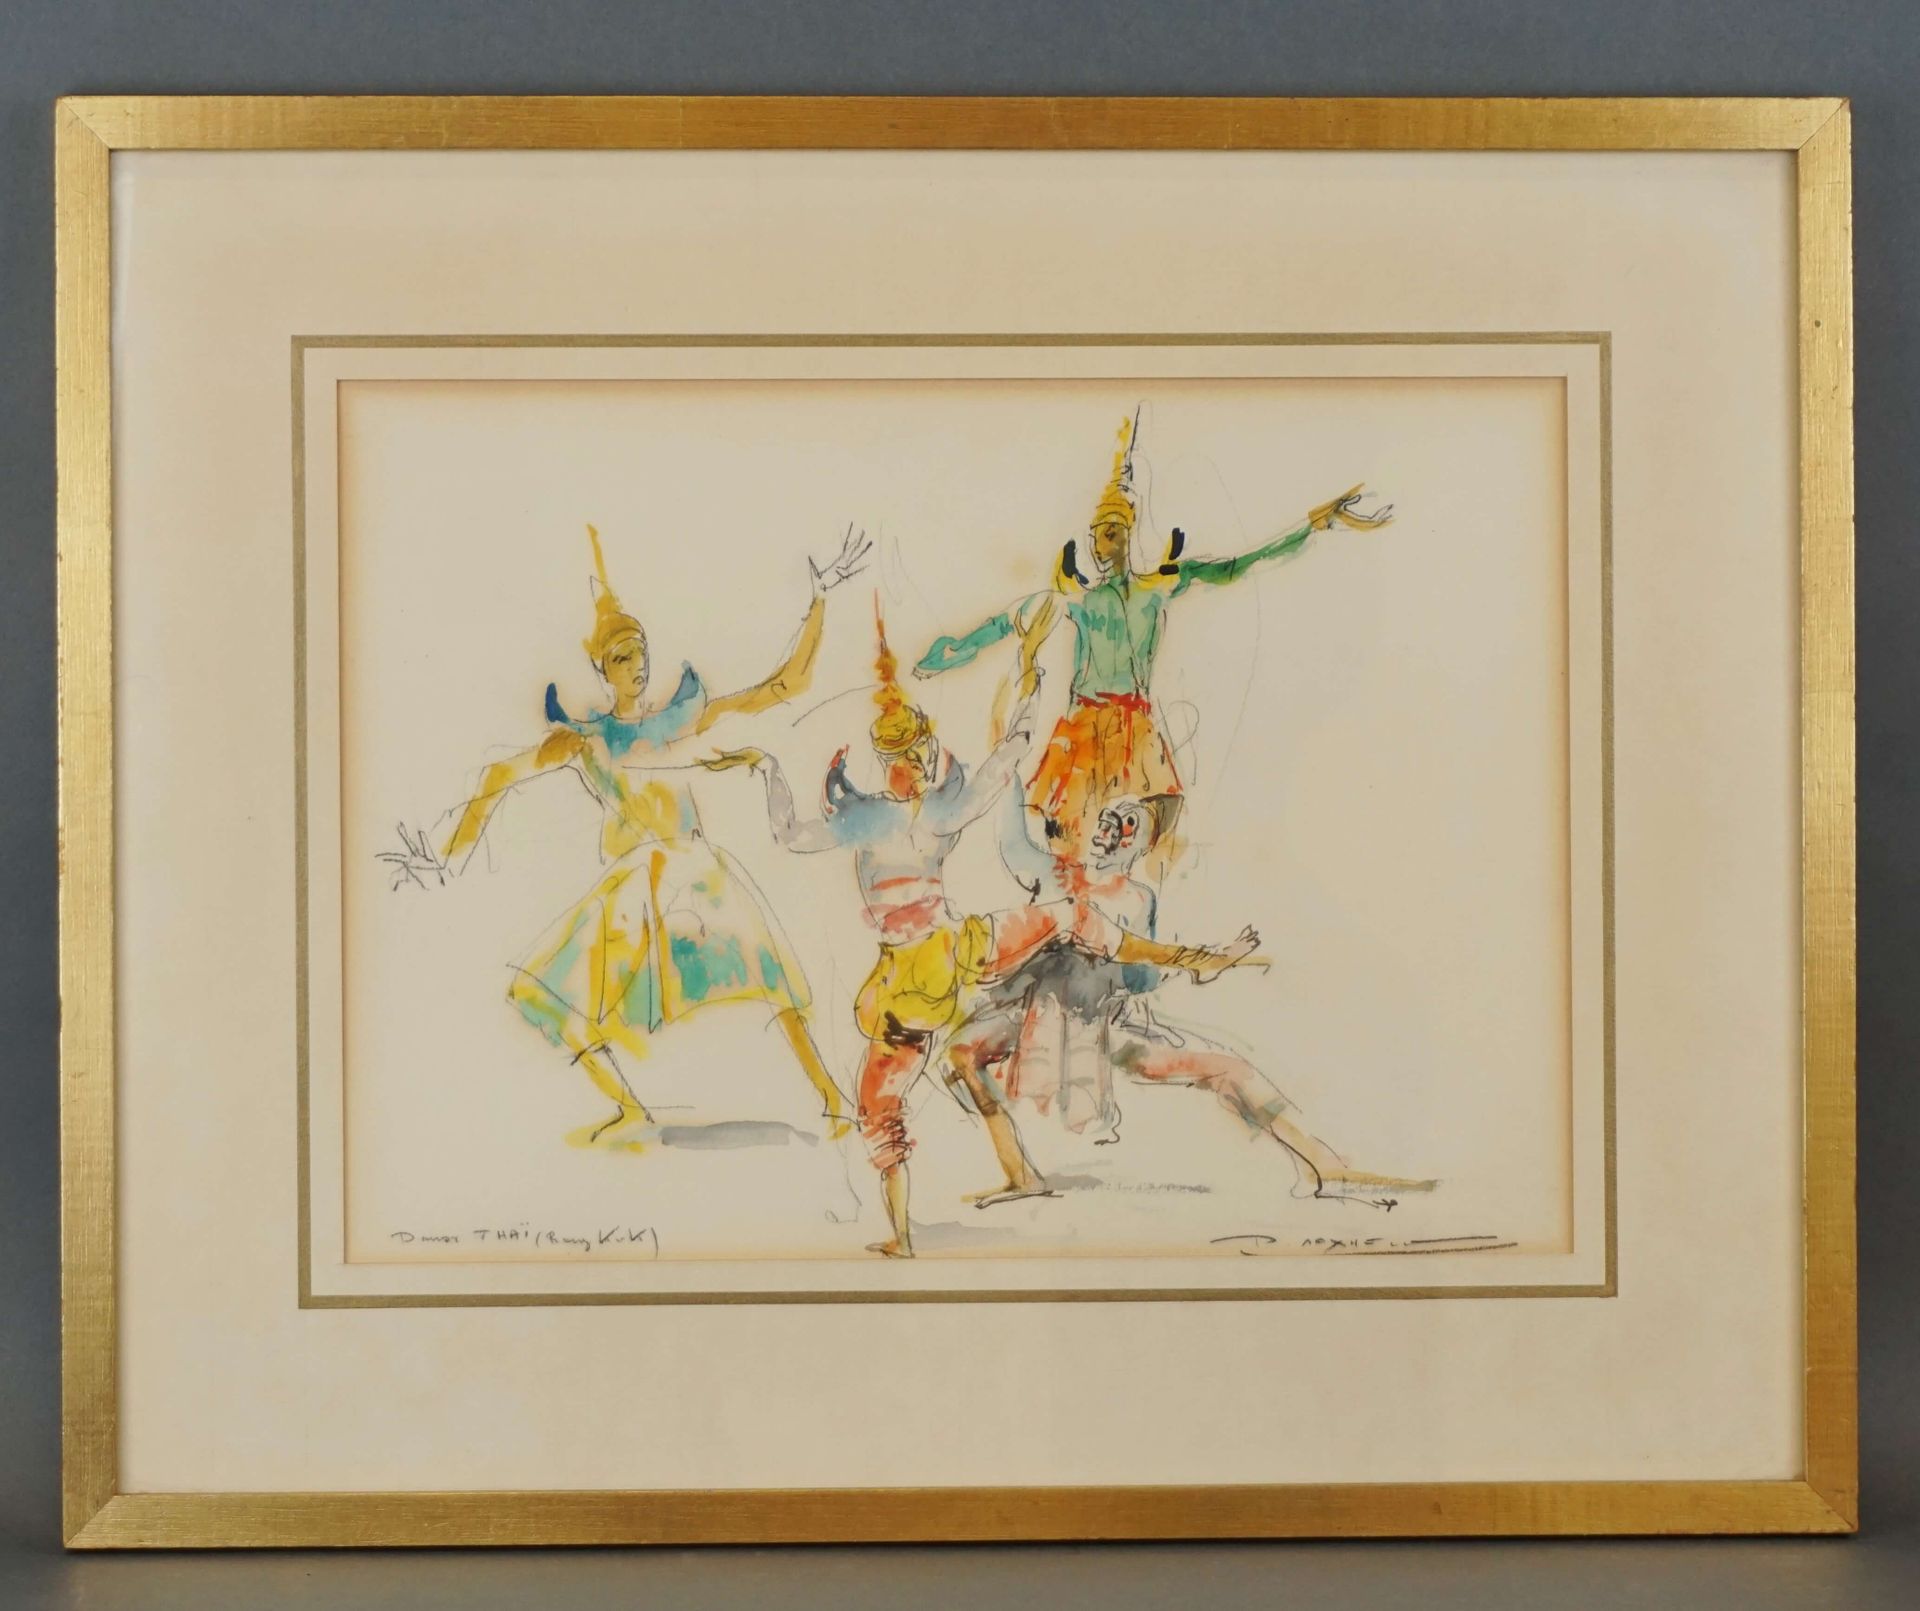 DAXHELET Paul (1905-1993) Acquerello firmato P. Daxhelet "Thai dance". 25x34 cm